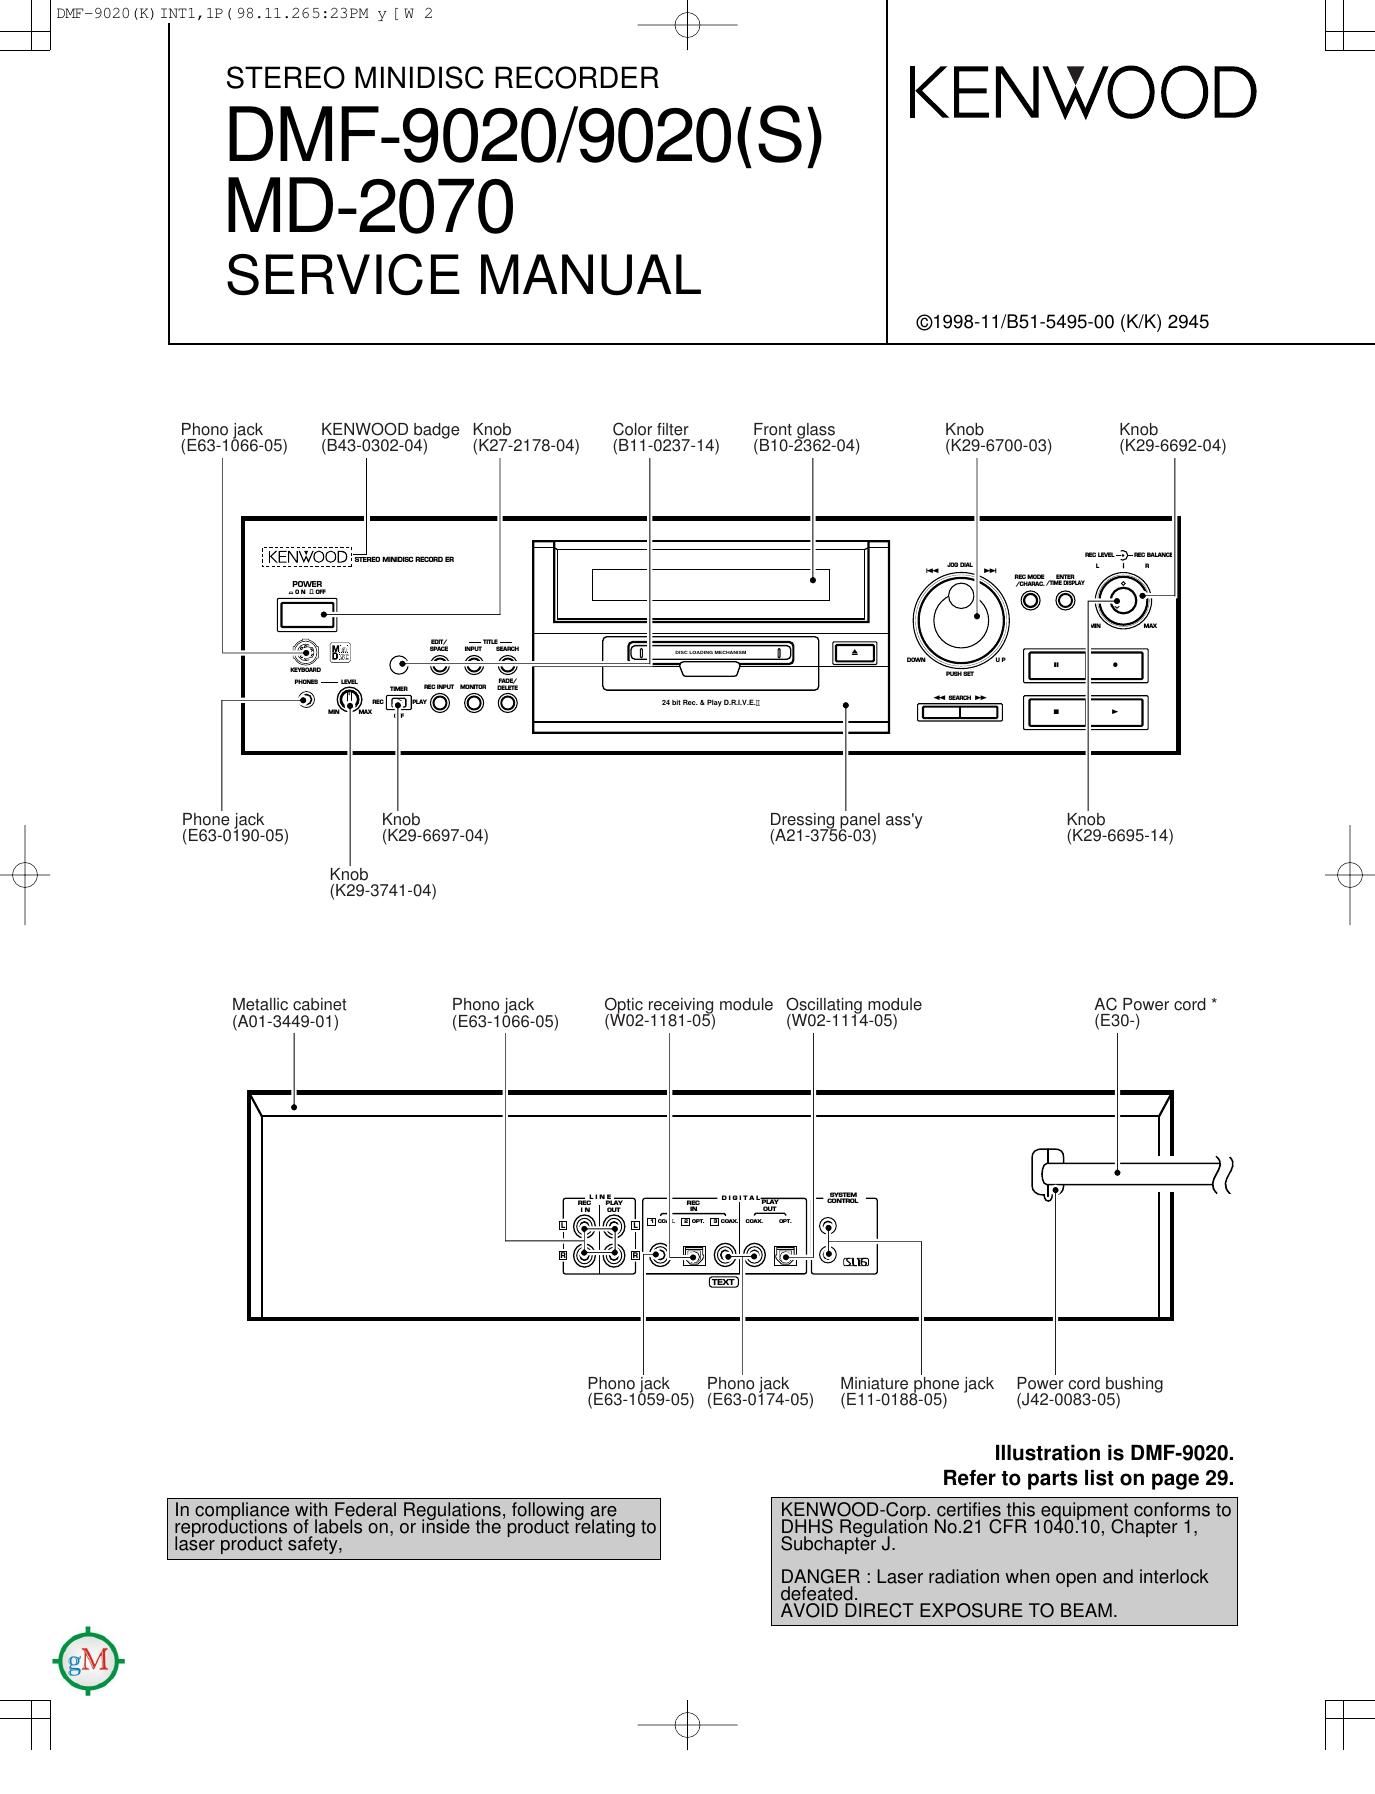 Kenwood DMF 9020 S Service Manual